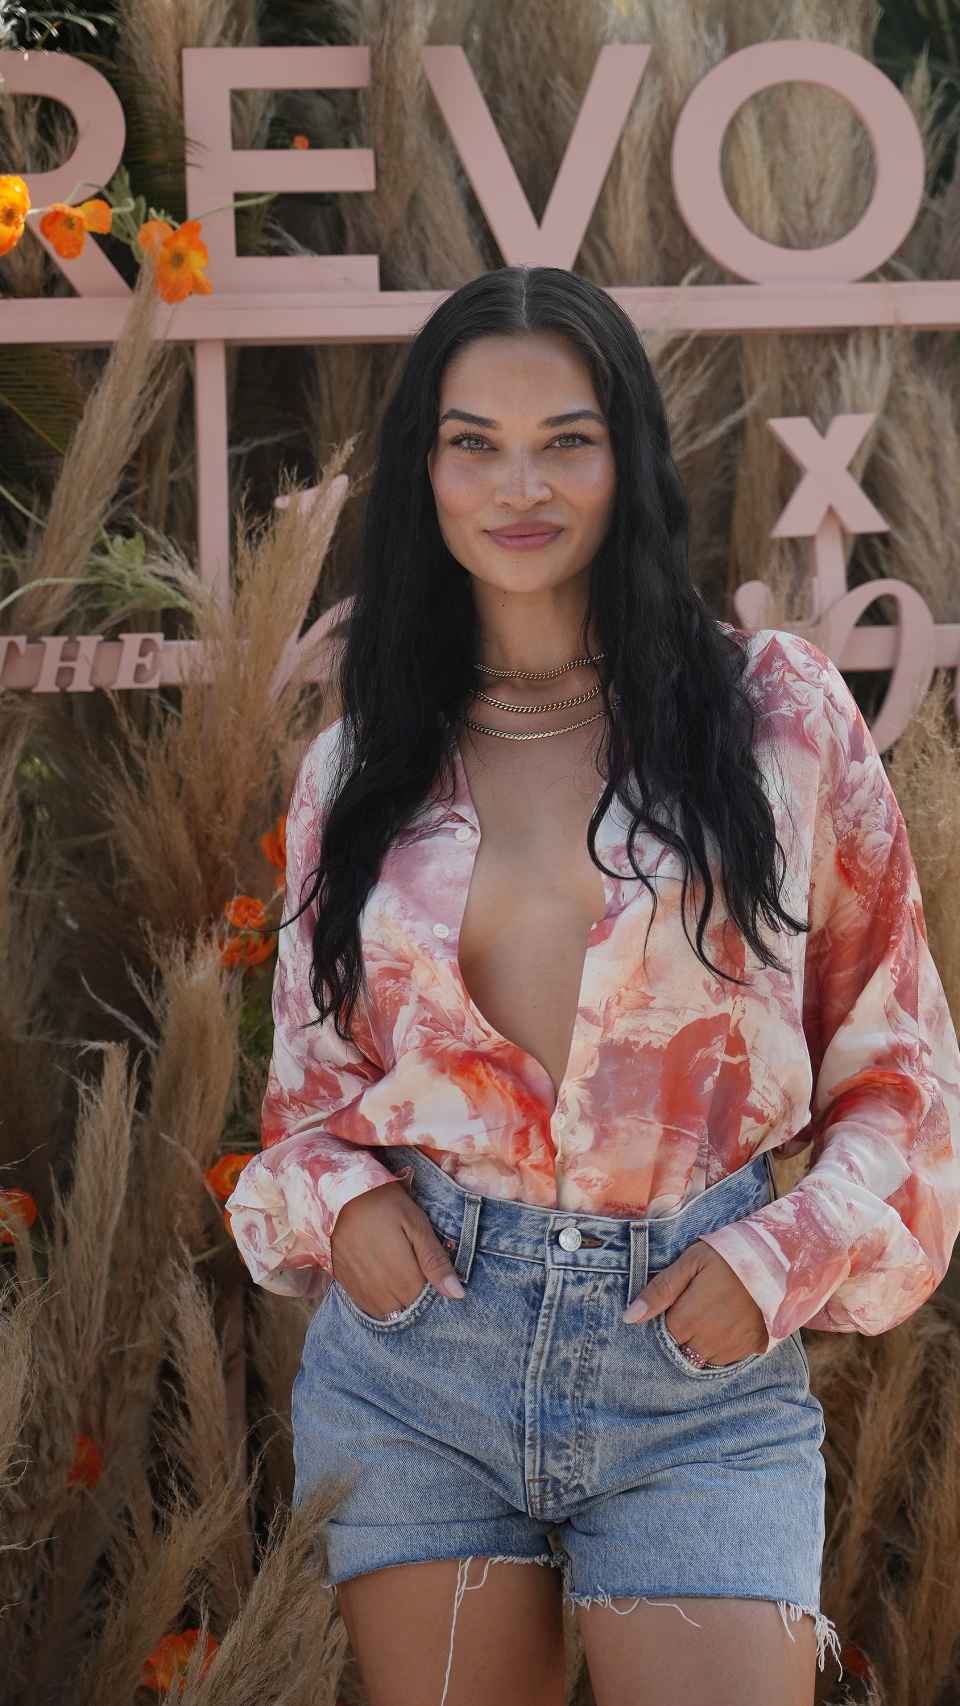 La modelo Shanina Shaik durante el Coachella Music Festival en La Quinta.